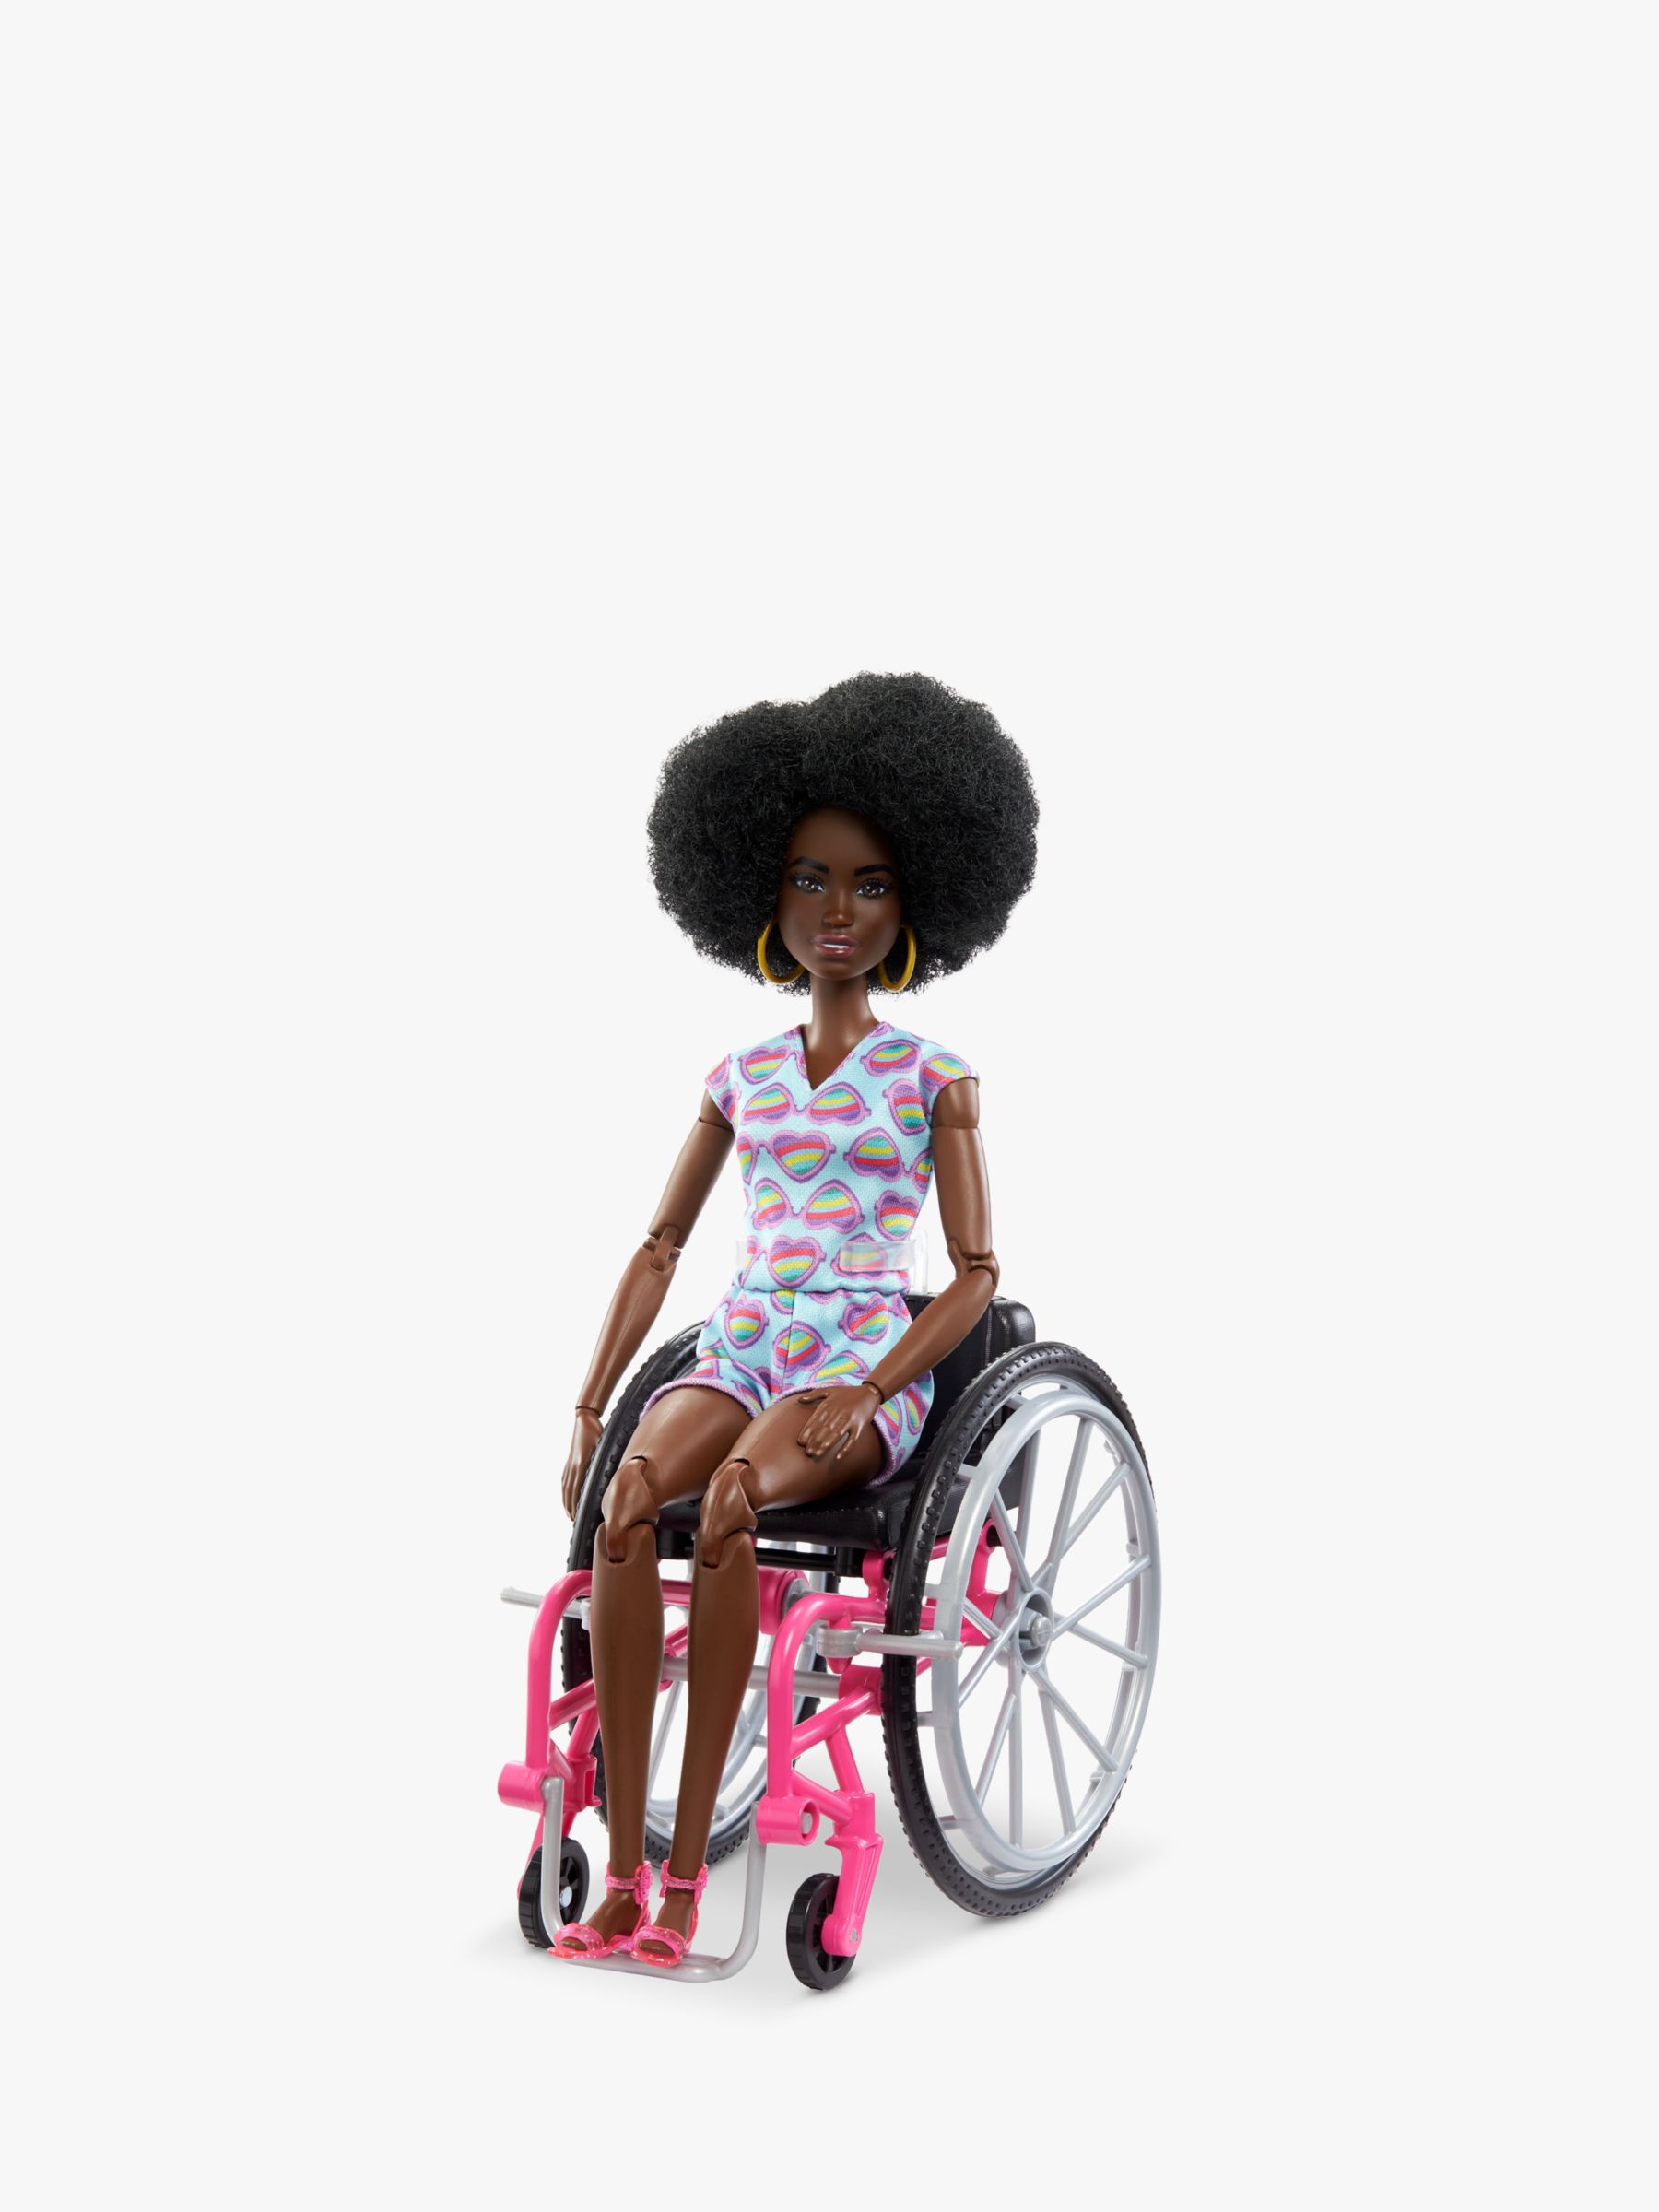 Barbie's Expanding Inclusivity